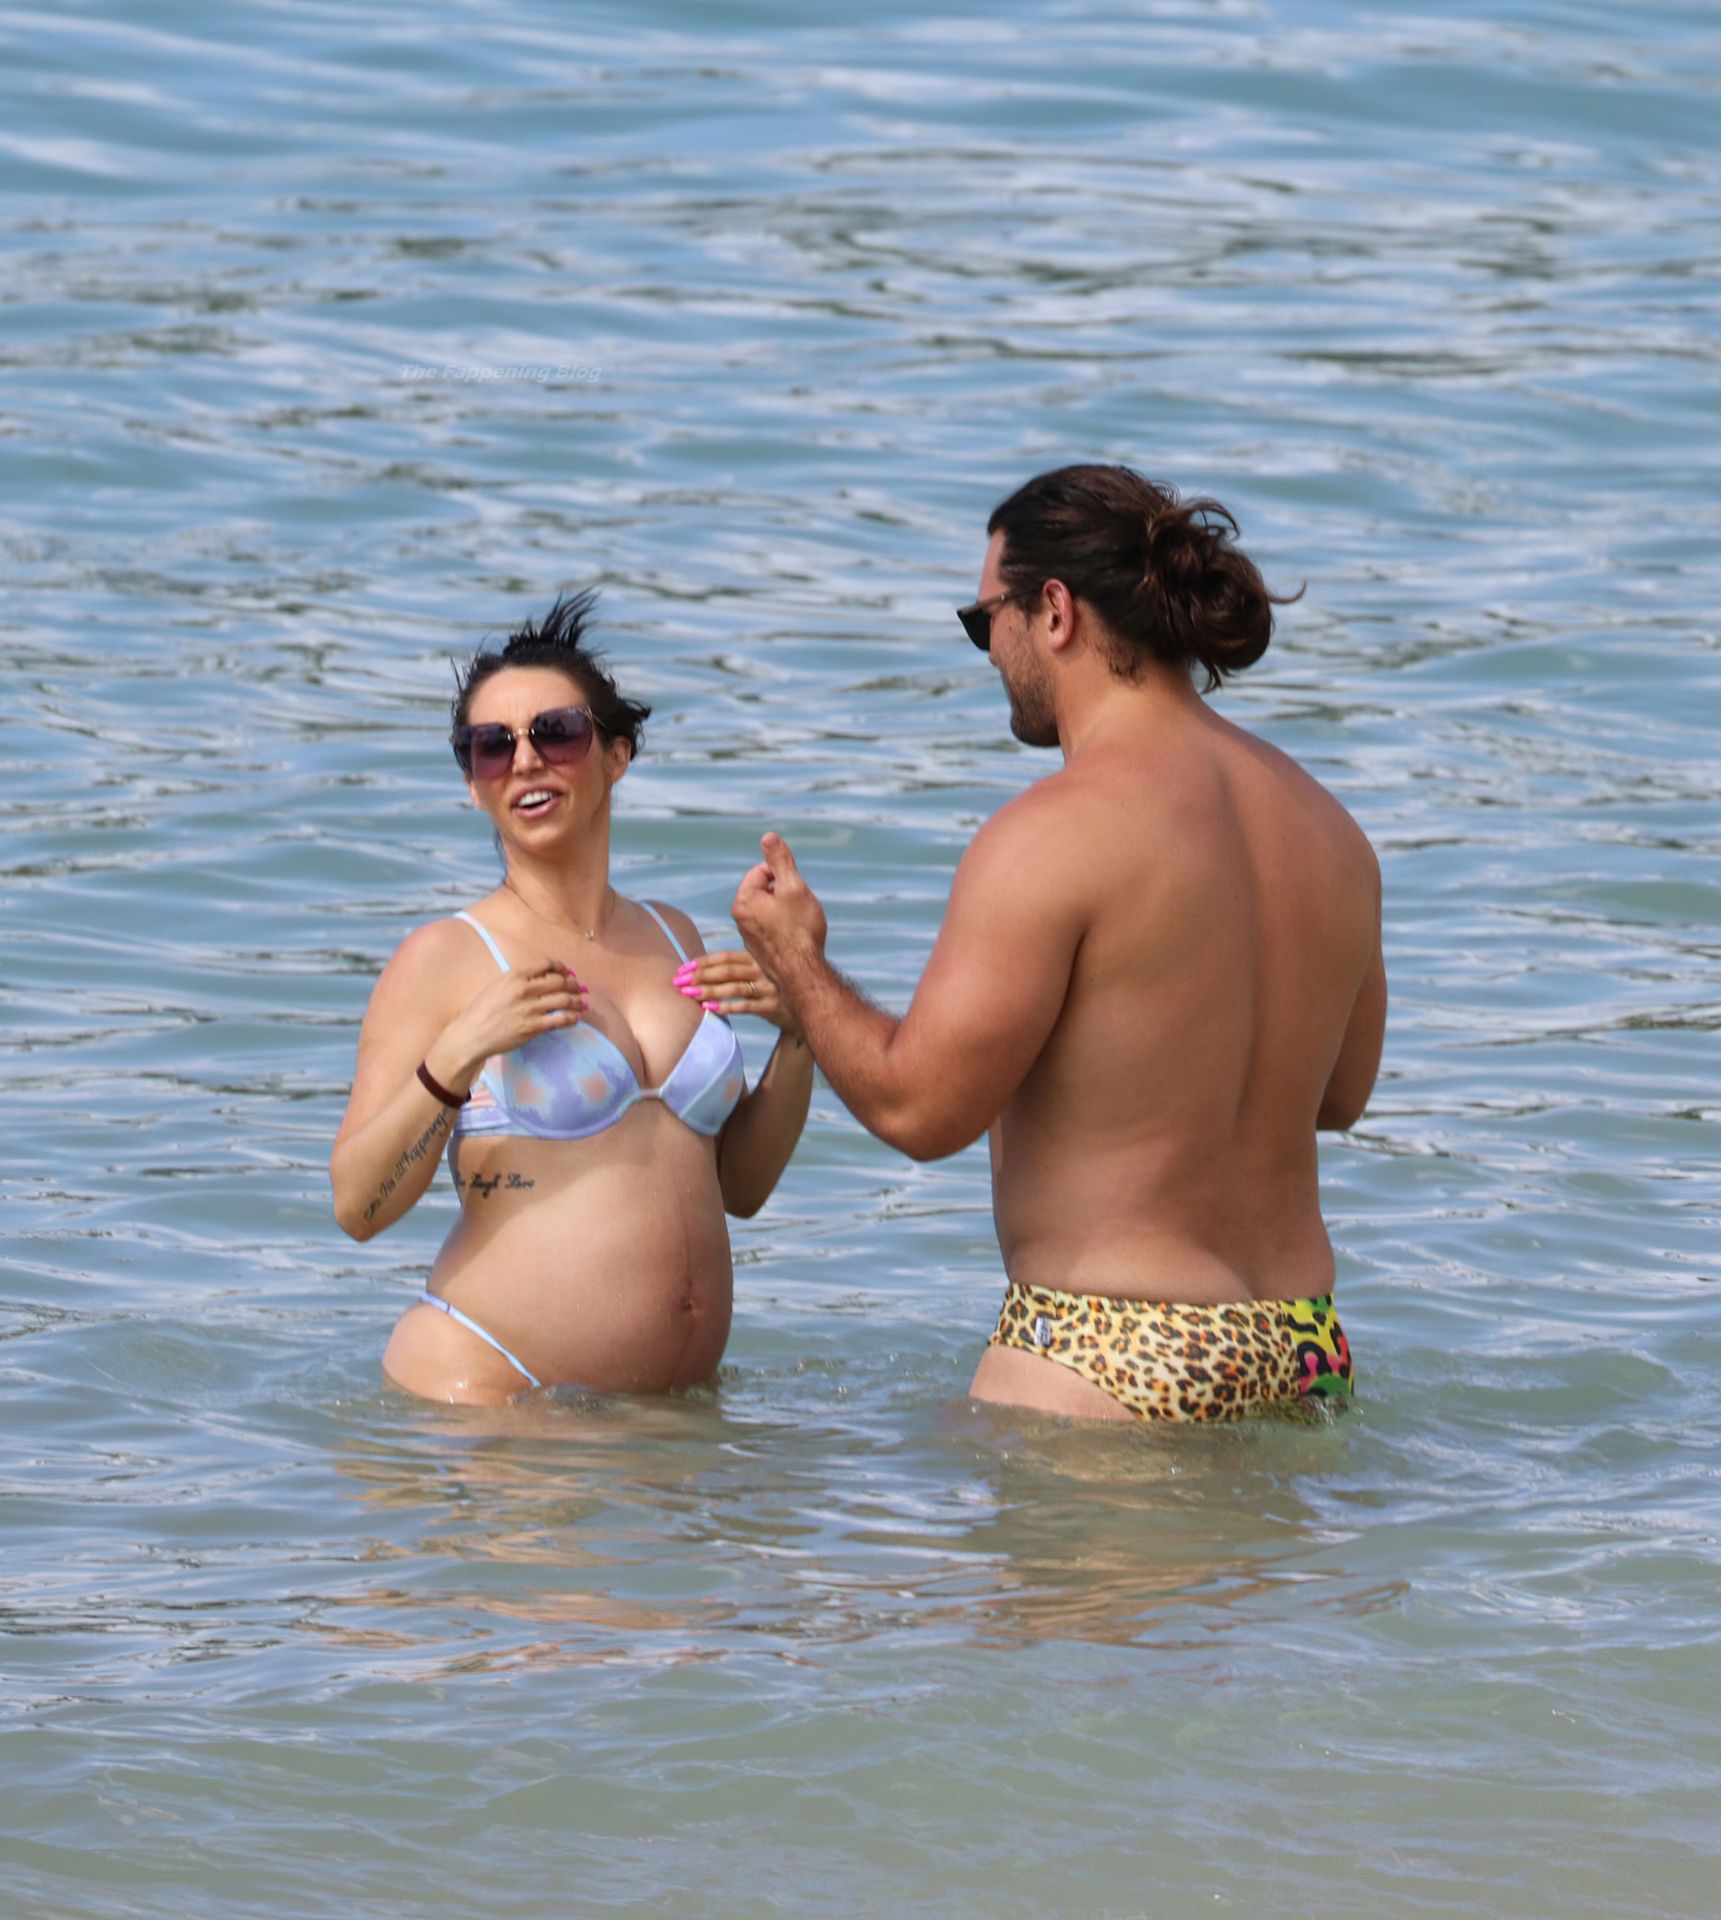 Scheana Shay & Brock Davies Enjoy a Day at The Beach in Hawaii (30 Phot...